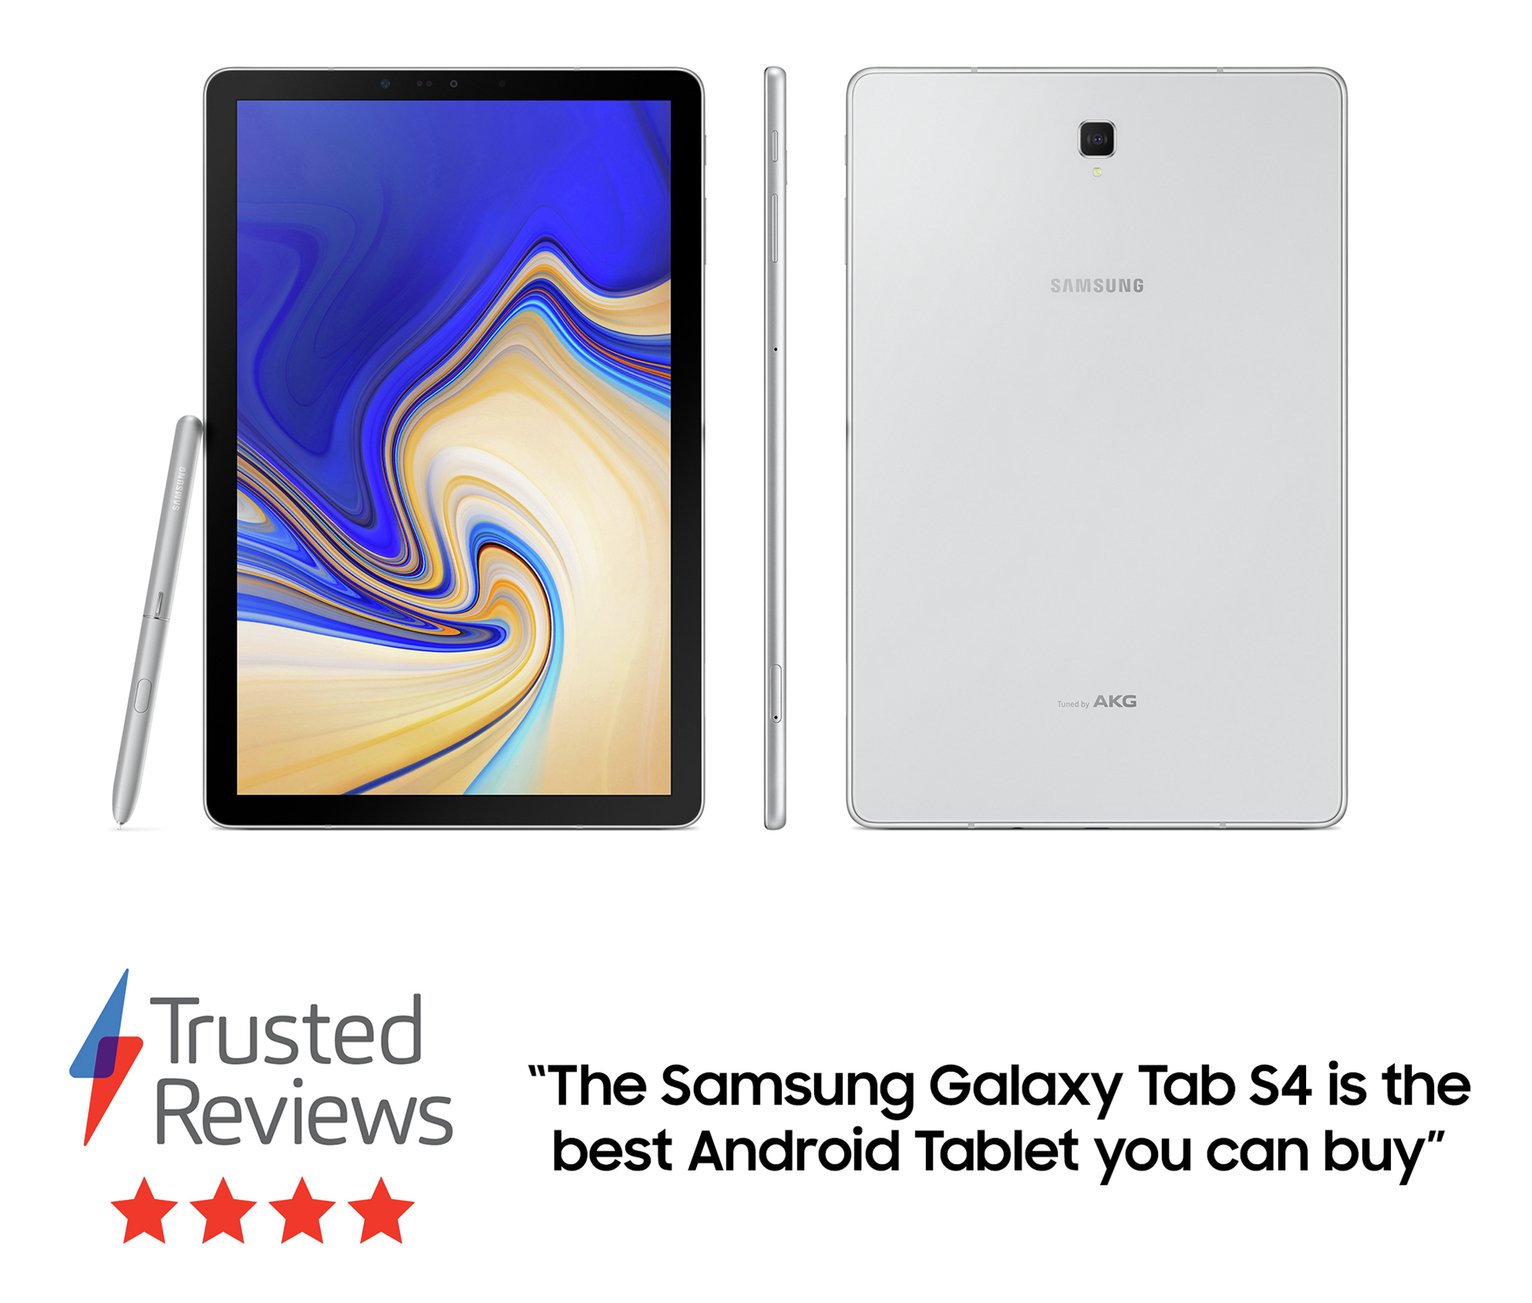 Samsung Galaxy Tab S4 10.5 Inch 64GB Tablet Review